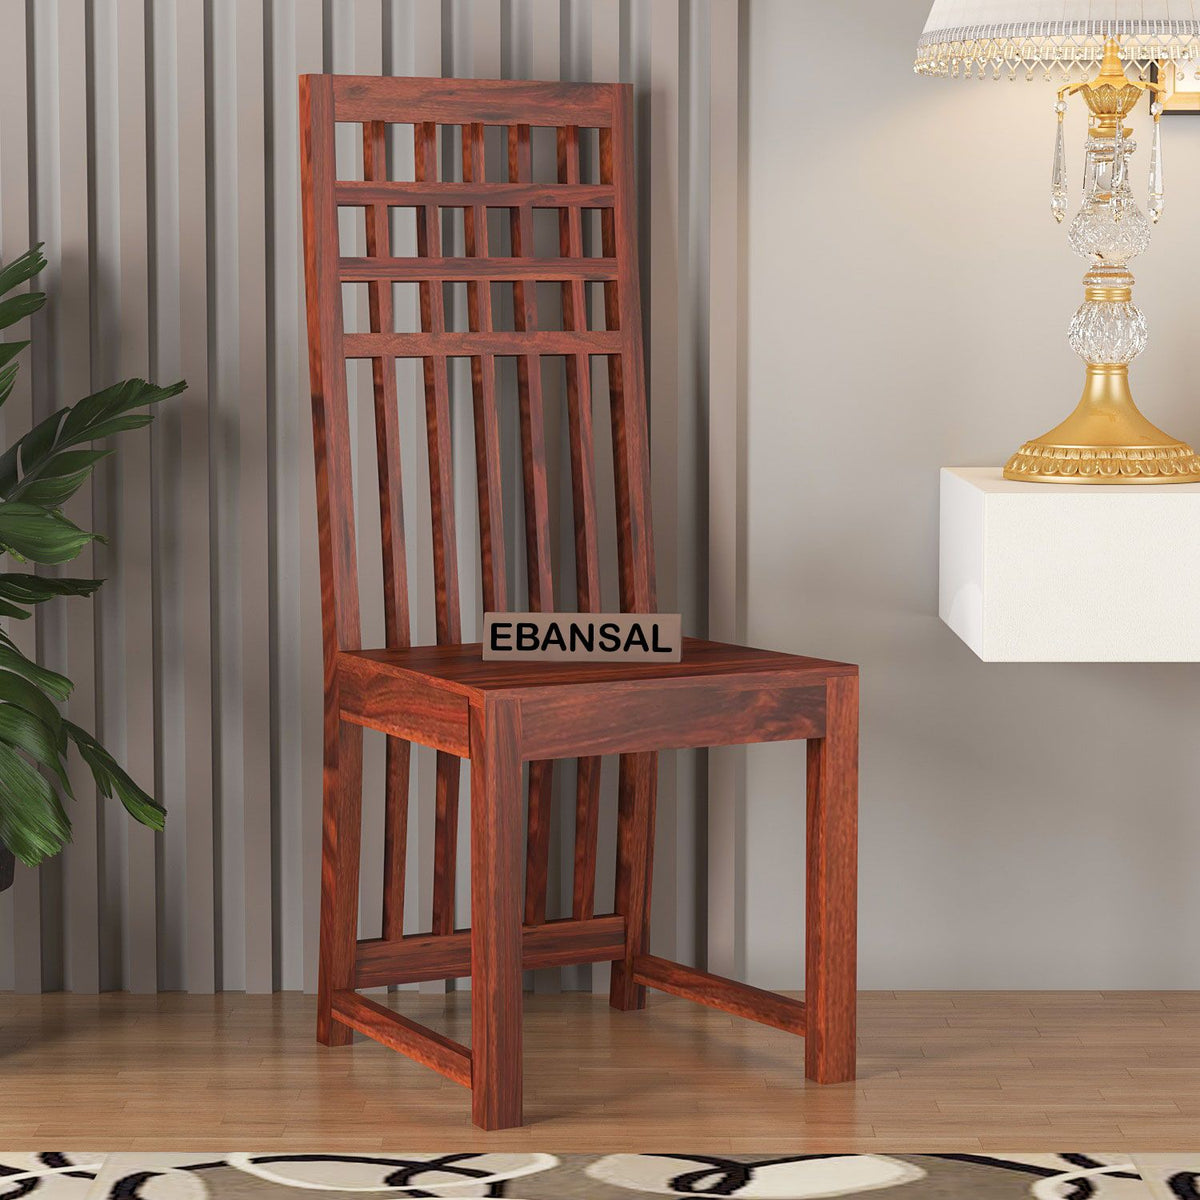 Amer Solid Sheesham Wood High Back Chair (Natural Finish)